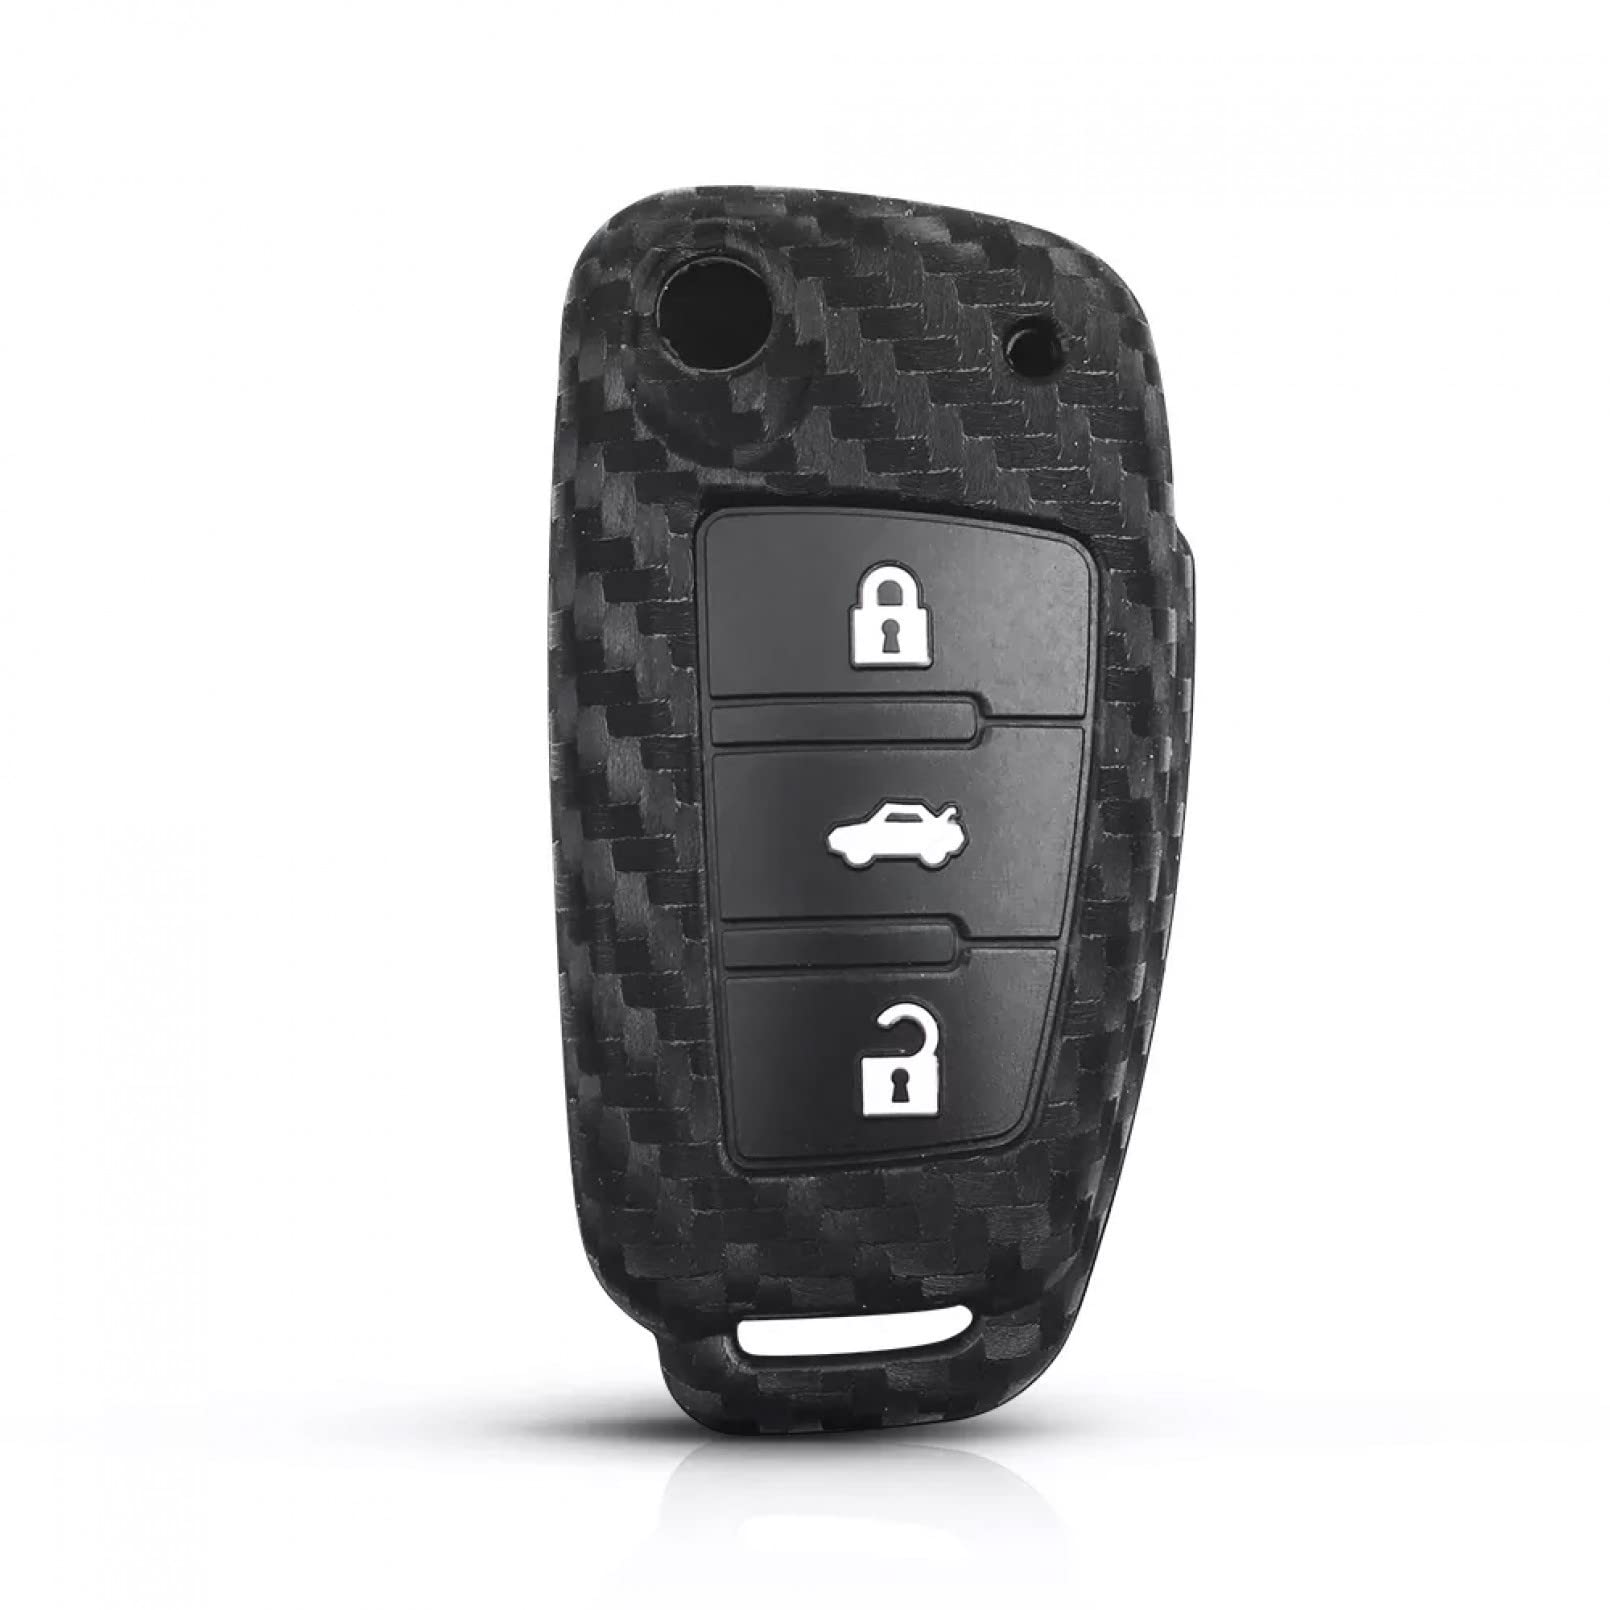 Silikon Auto Remote Key Protector Cover Case Fob Shell Auto Zubehör 3 Tasten für Audi Sline A3 A5 Q3 Q5 A6 C5 C6 A4 B6 B7 B8 TT 80 S6 von ALIANQ